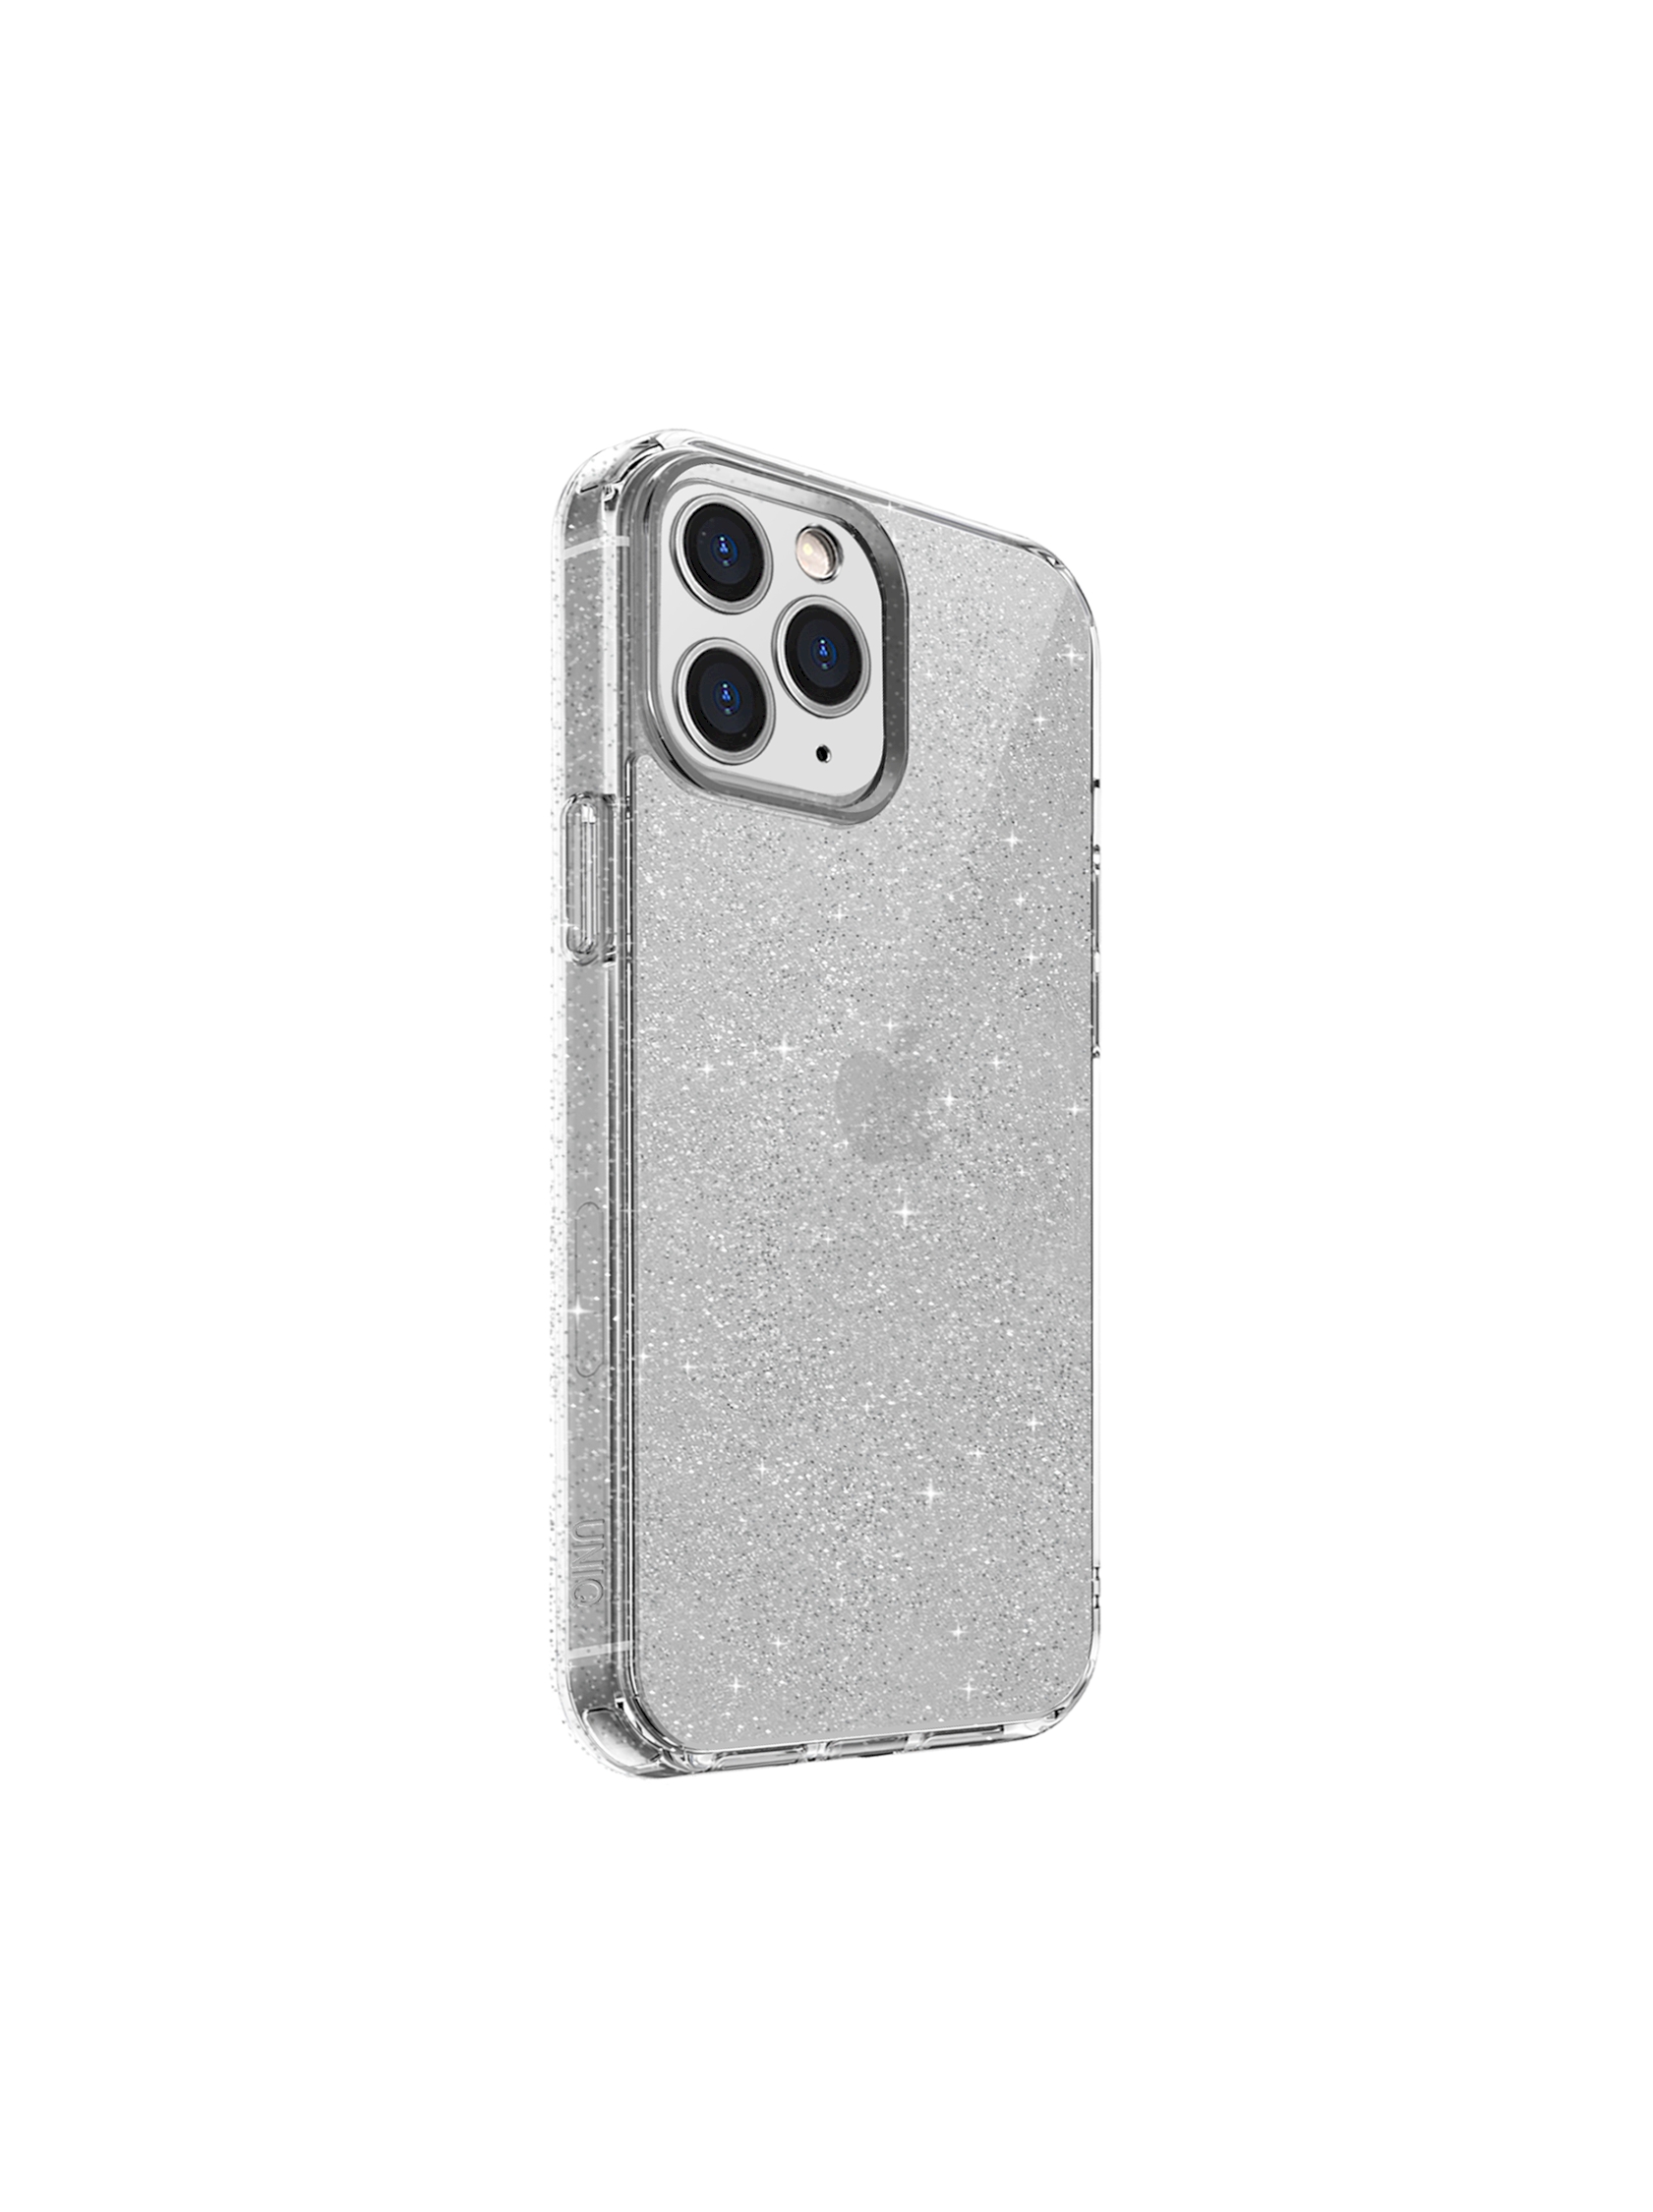 iPhone 12 Pro Max, case lifepro tinsel, transparent